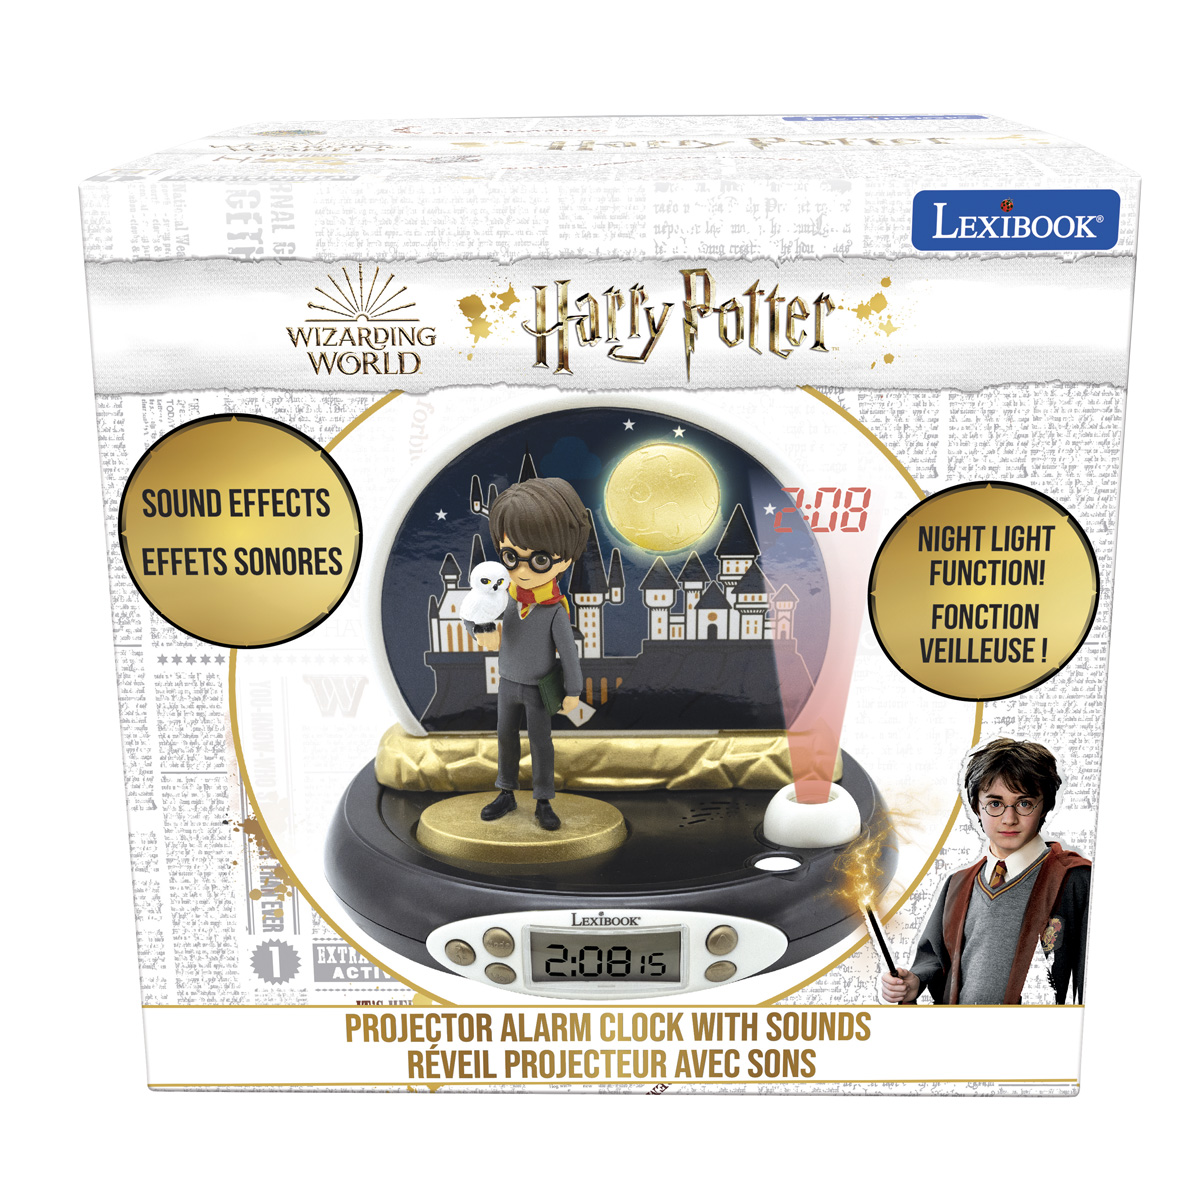 3D Potter Projektionswecker, LEXIBOOK Harry Projektionswecker Schwarz/Weiß